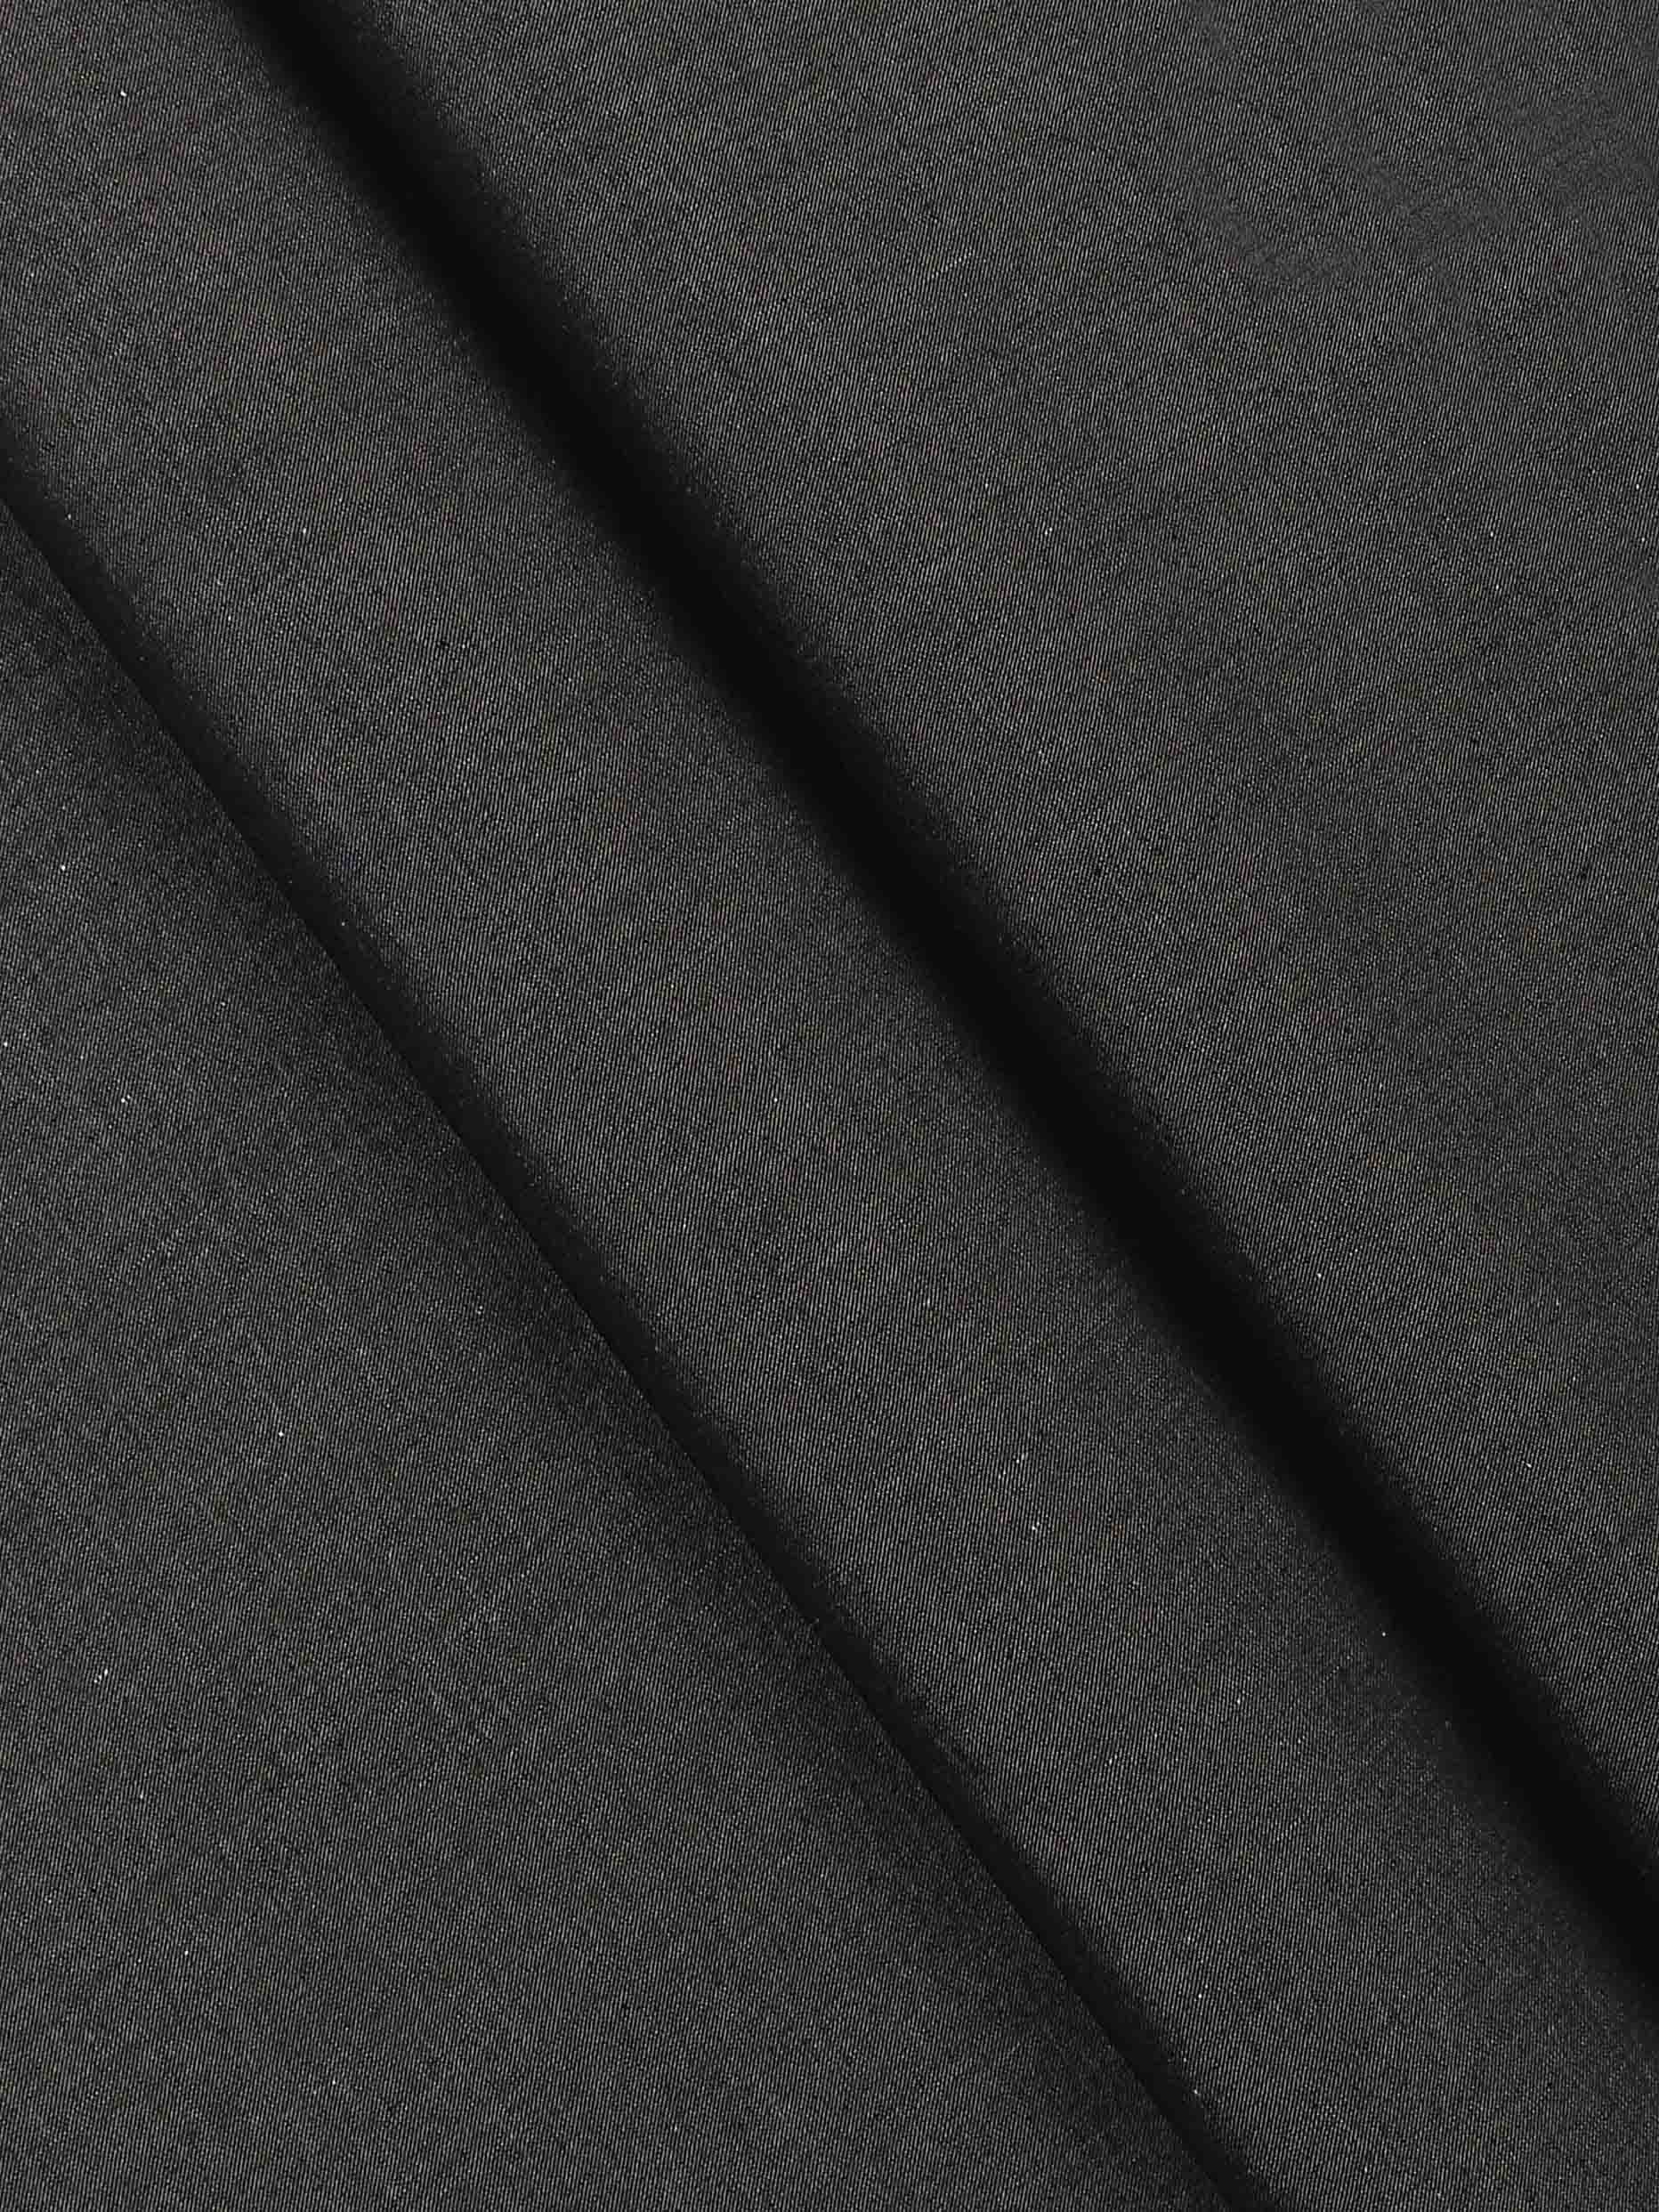 Supima Cotton Grey Colour Plain Shirt Fabric Hummer